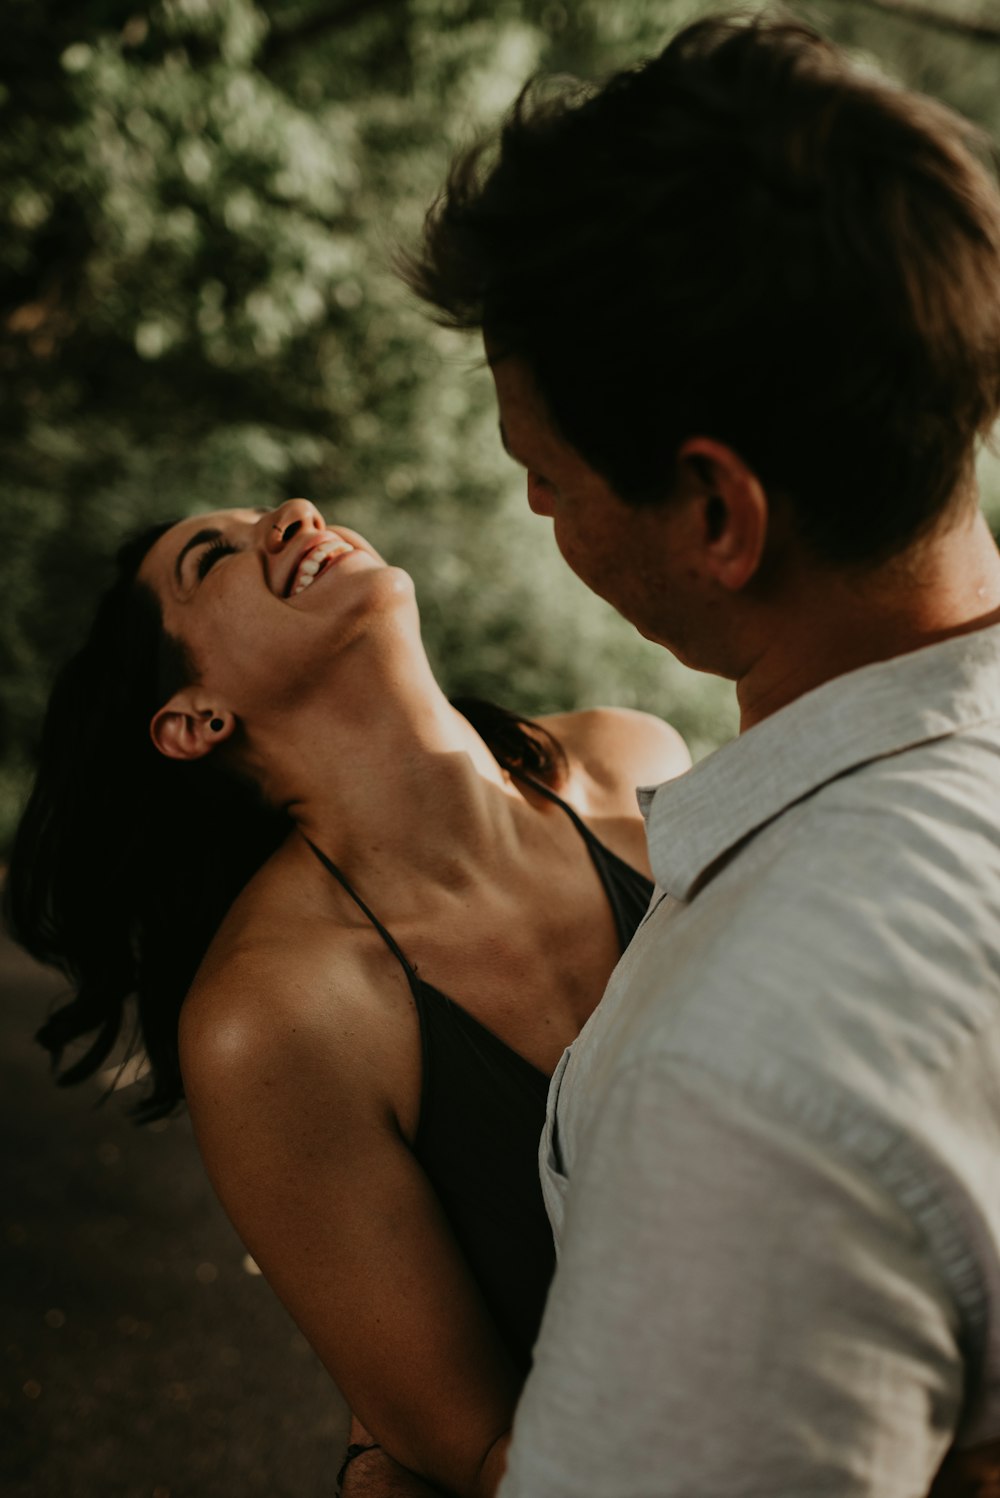 man in white dress shirt kissing woman in black spaghetti strap top